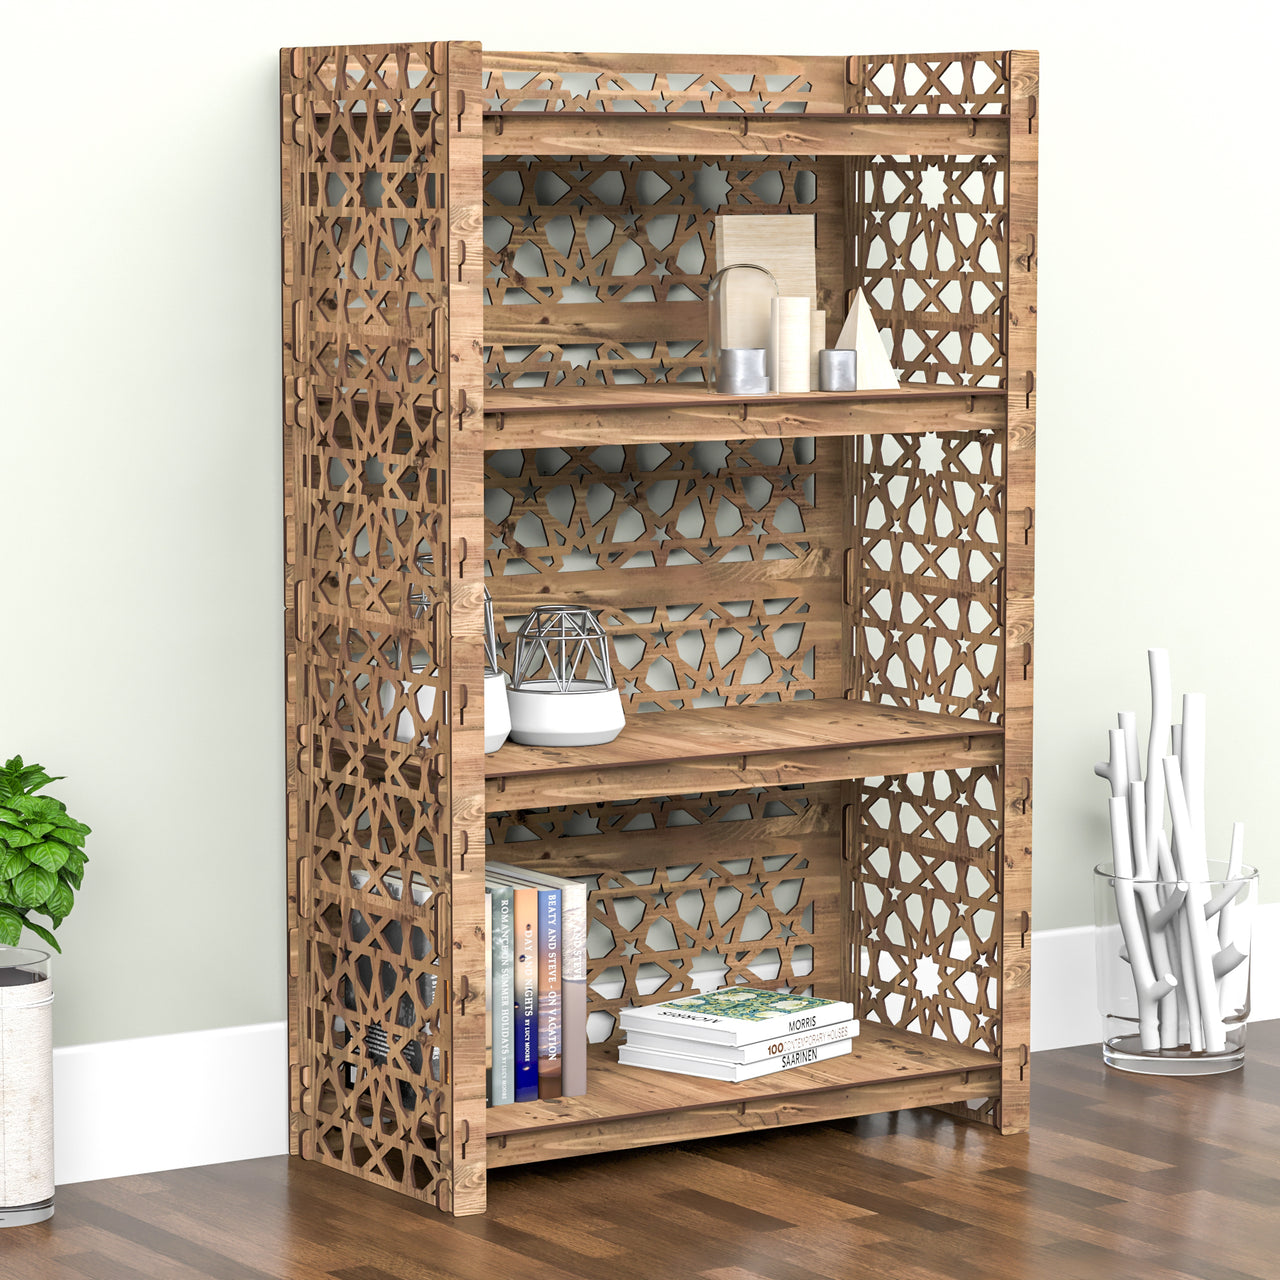 Arabic LUX 4-tier Bookshelf Bookcase Shelving Unit